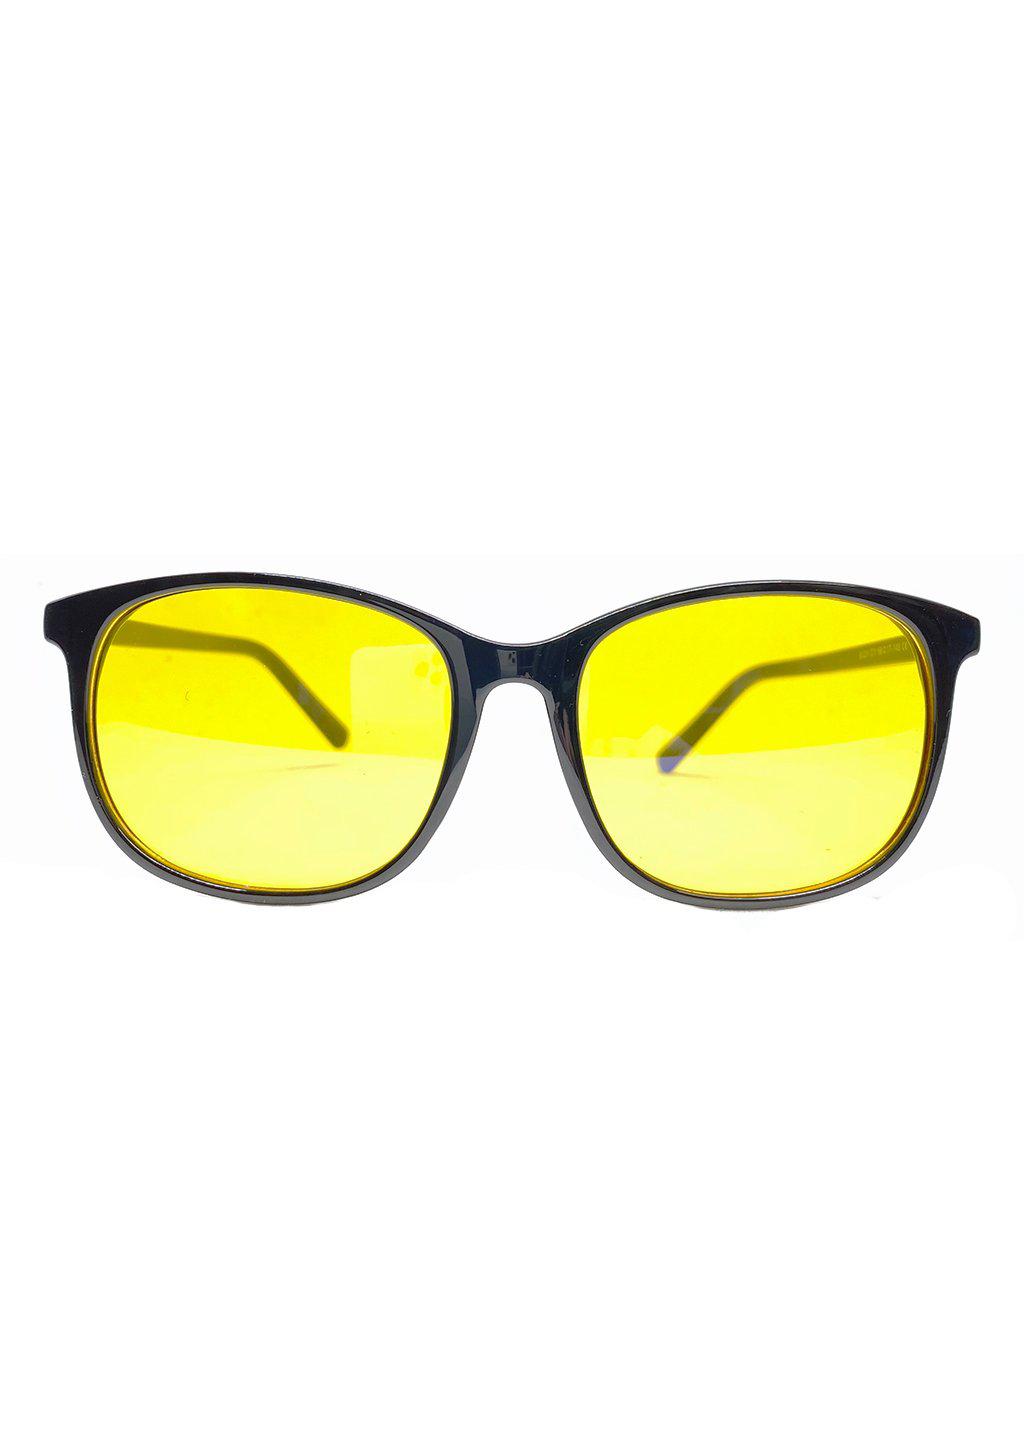 Blaulichtblockierung - Nexus - Blue-light glasses / Gaming glasses - Neo-1